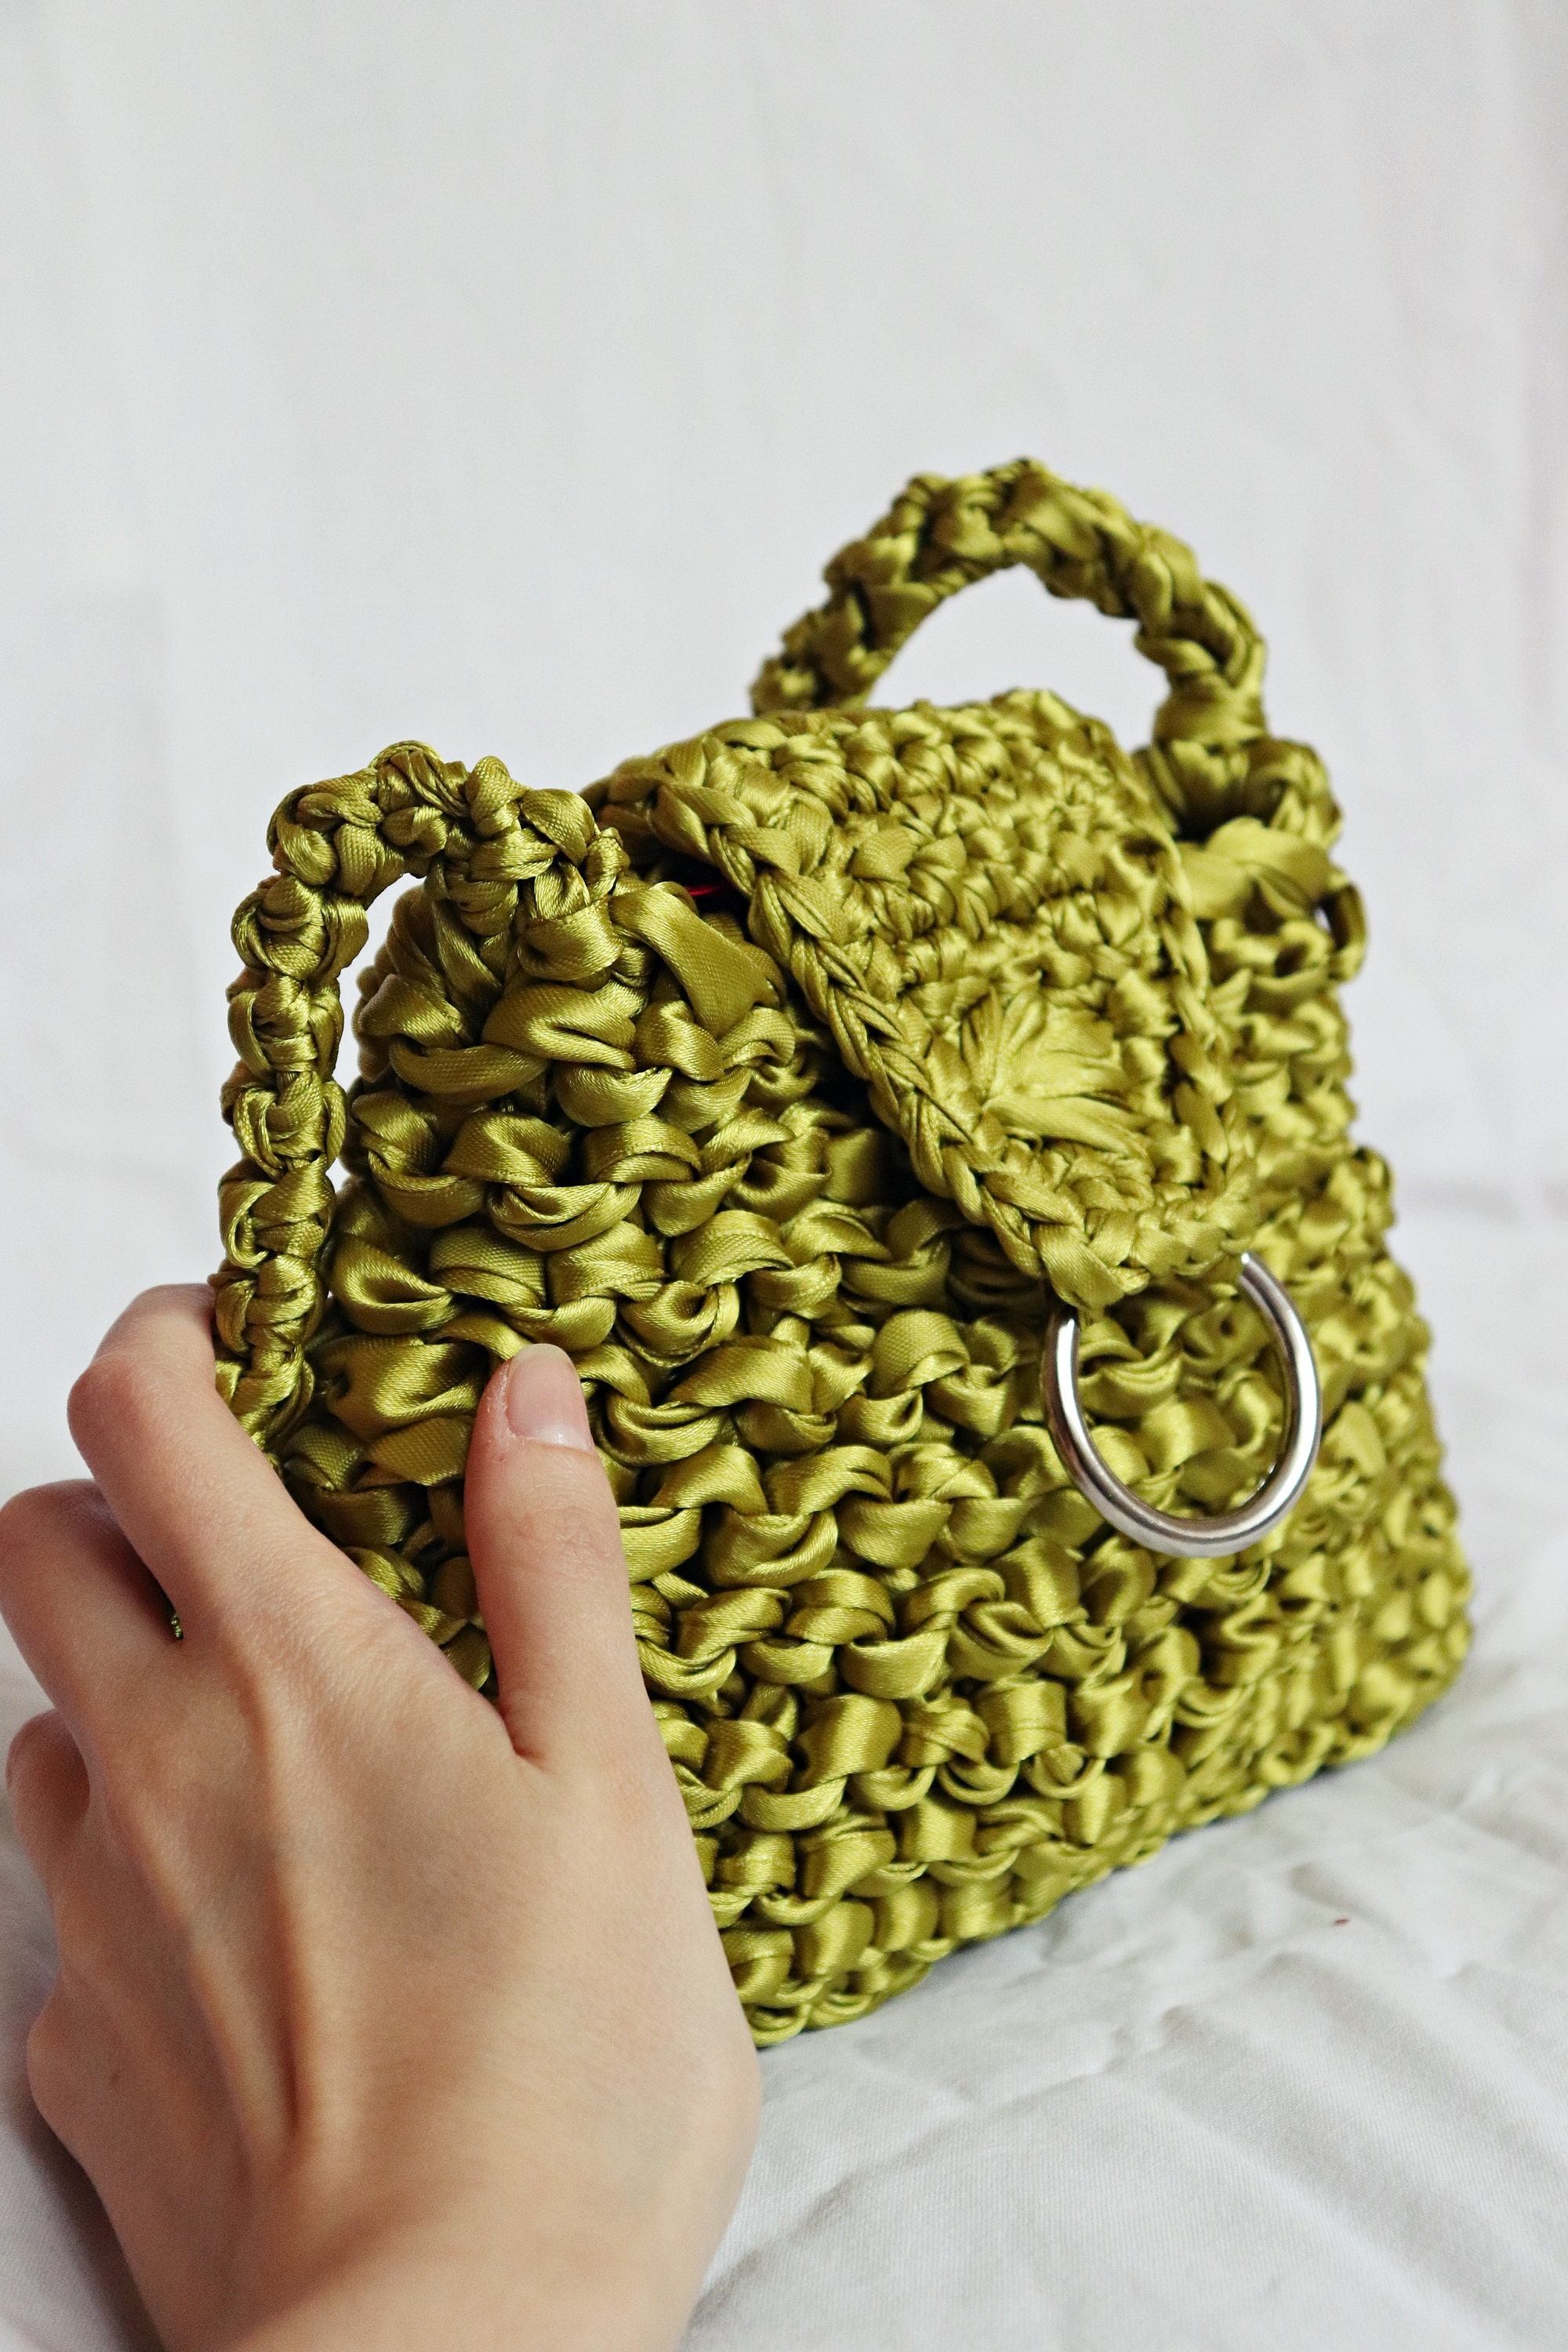 Does Crochet Bag Sometimes Make You Feel Stupid? – Telegraph